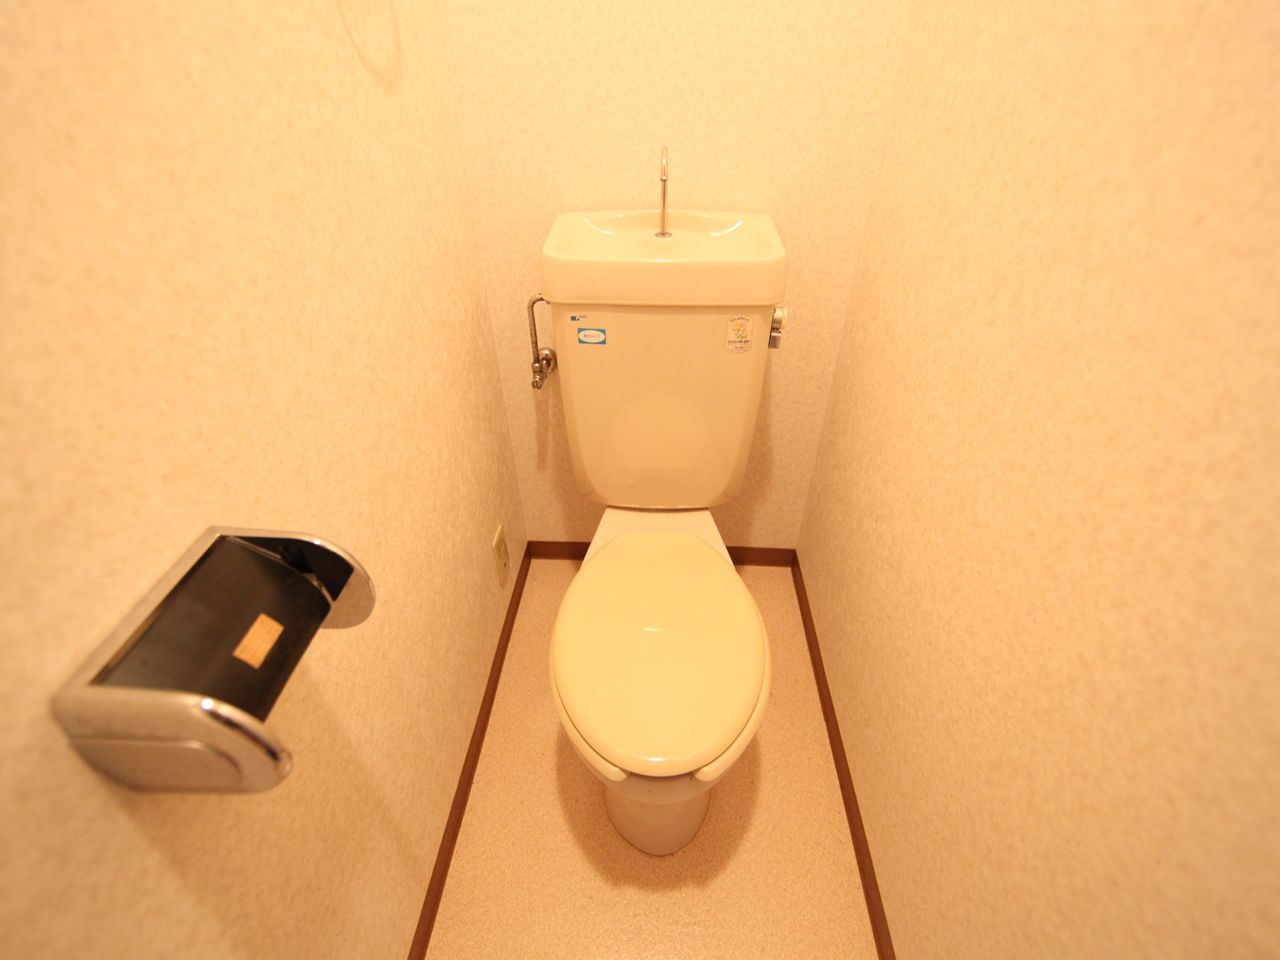 Toilet. toilet bus ・ Restroom Warm water washing heating toilet seat installation Allowed